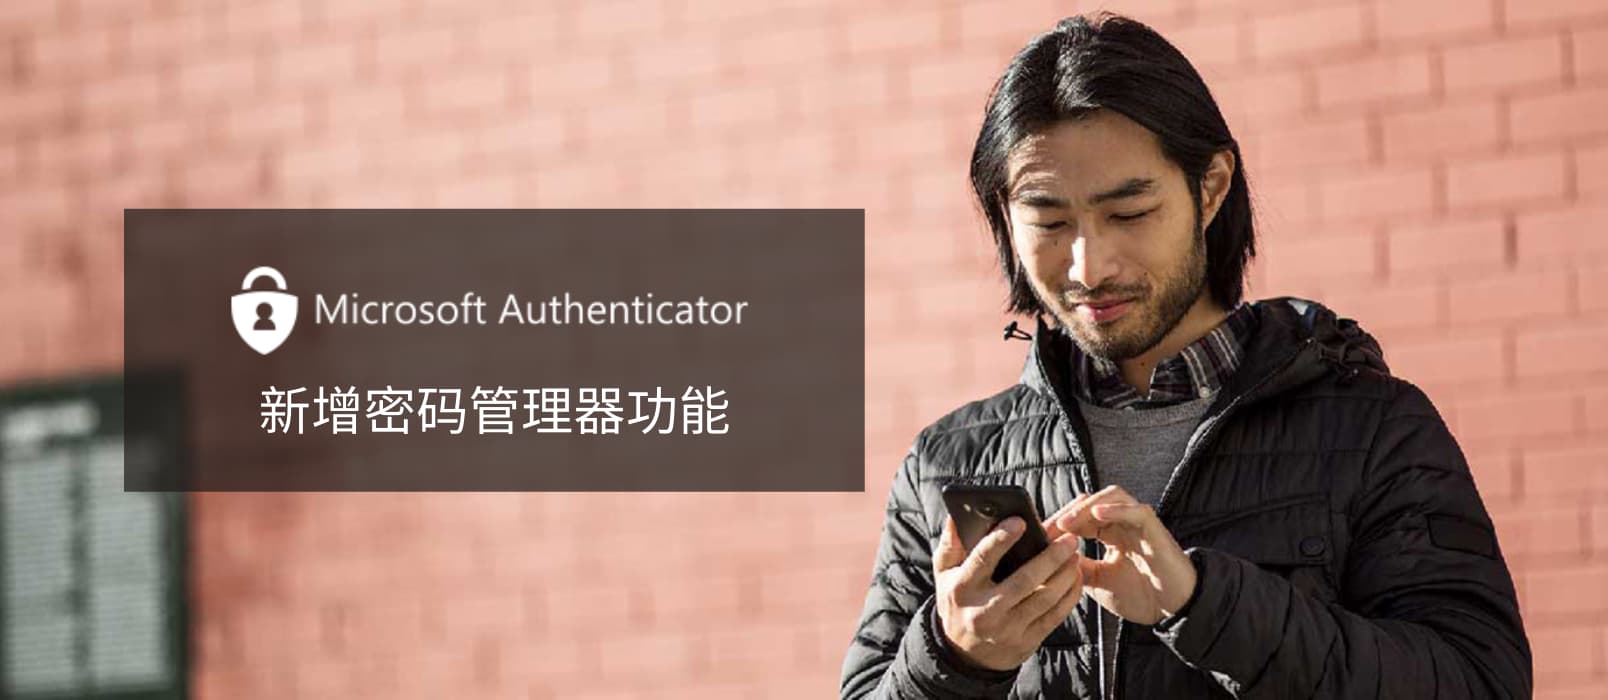 Microsoft Authenticator 密码管理器 - 从 Edge 同步密码，支持在 iPhone、Android 设备及 Chrome 中自动填写密码